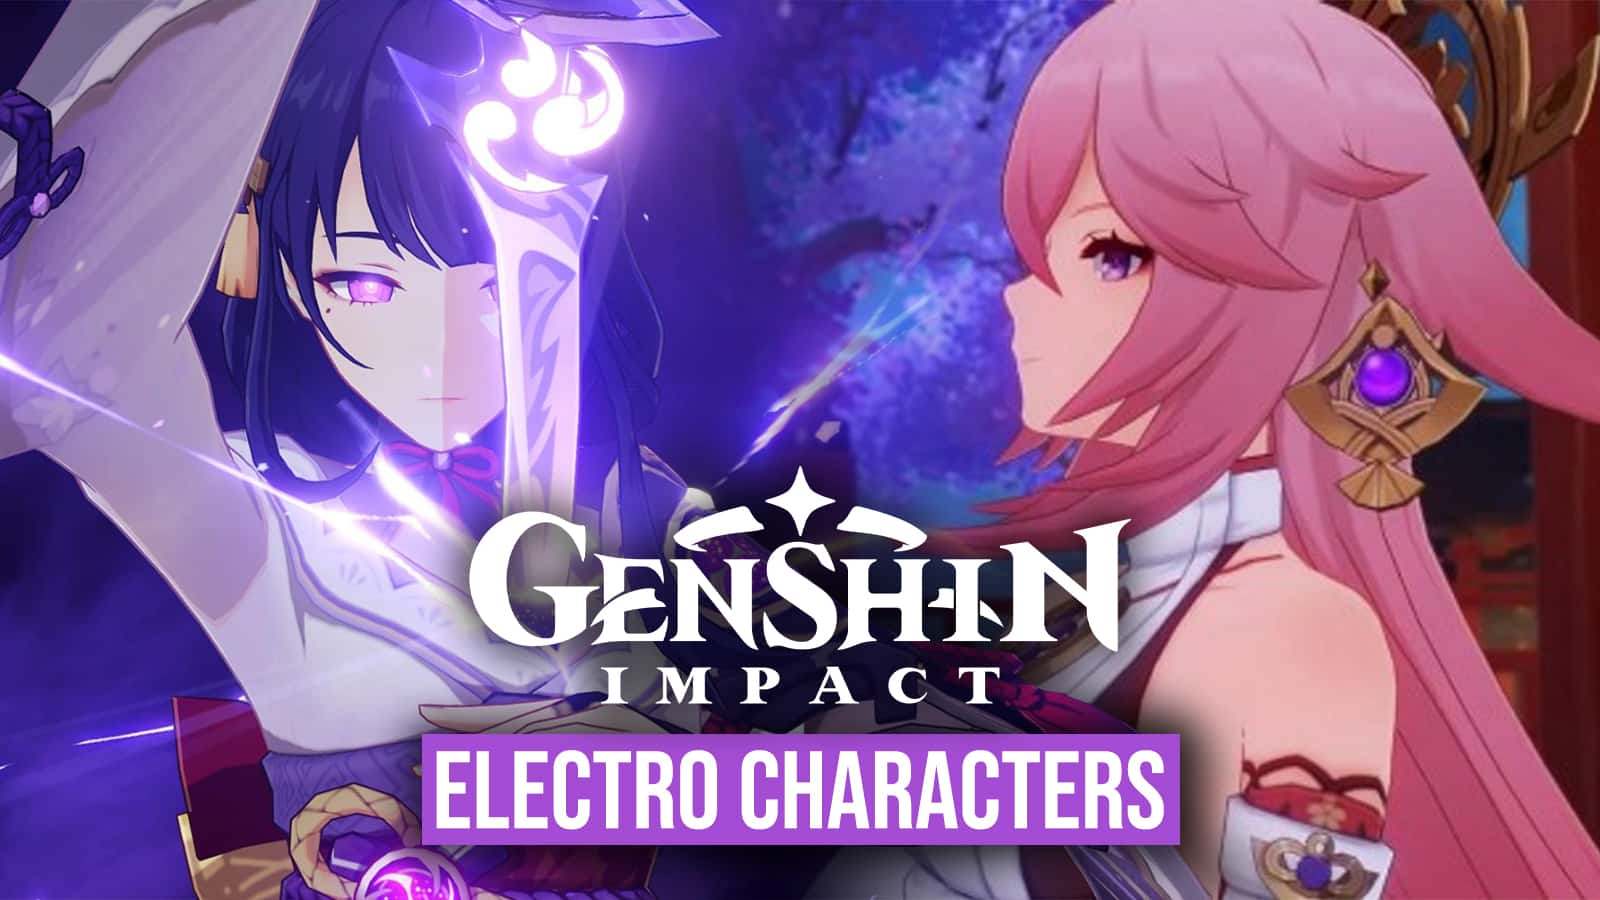 All Genshin Impact Electro characters: Yae Miko, Raiden Shogun